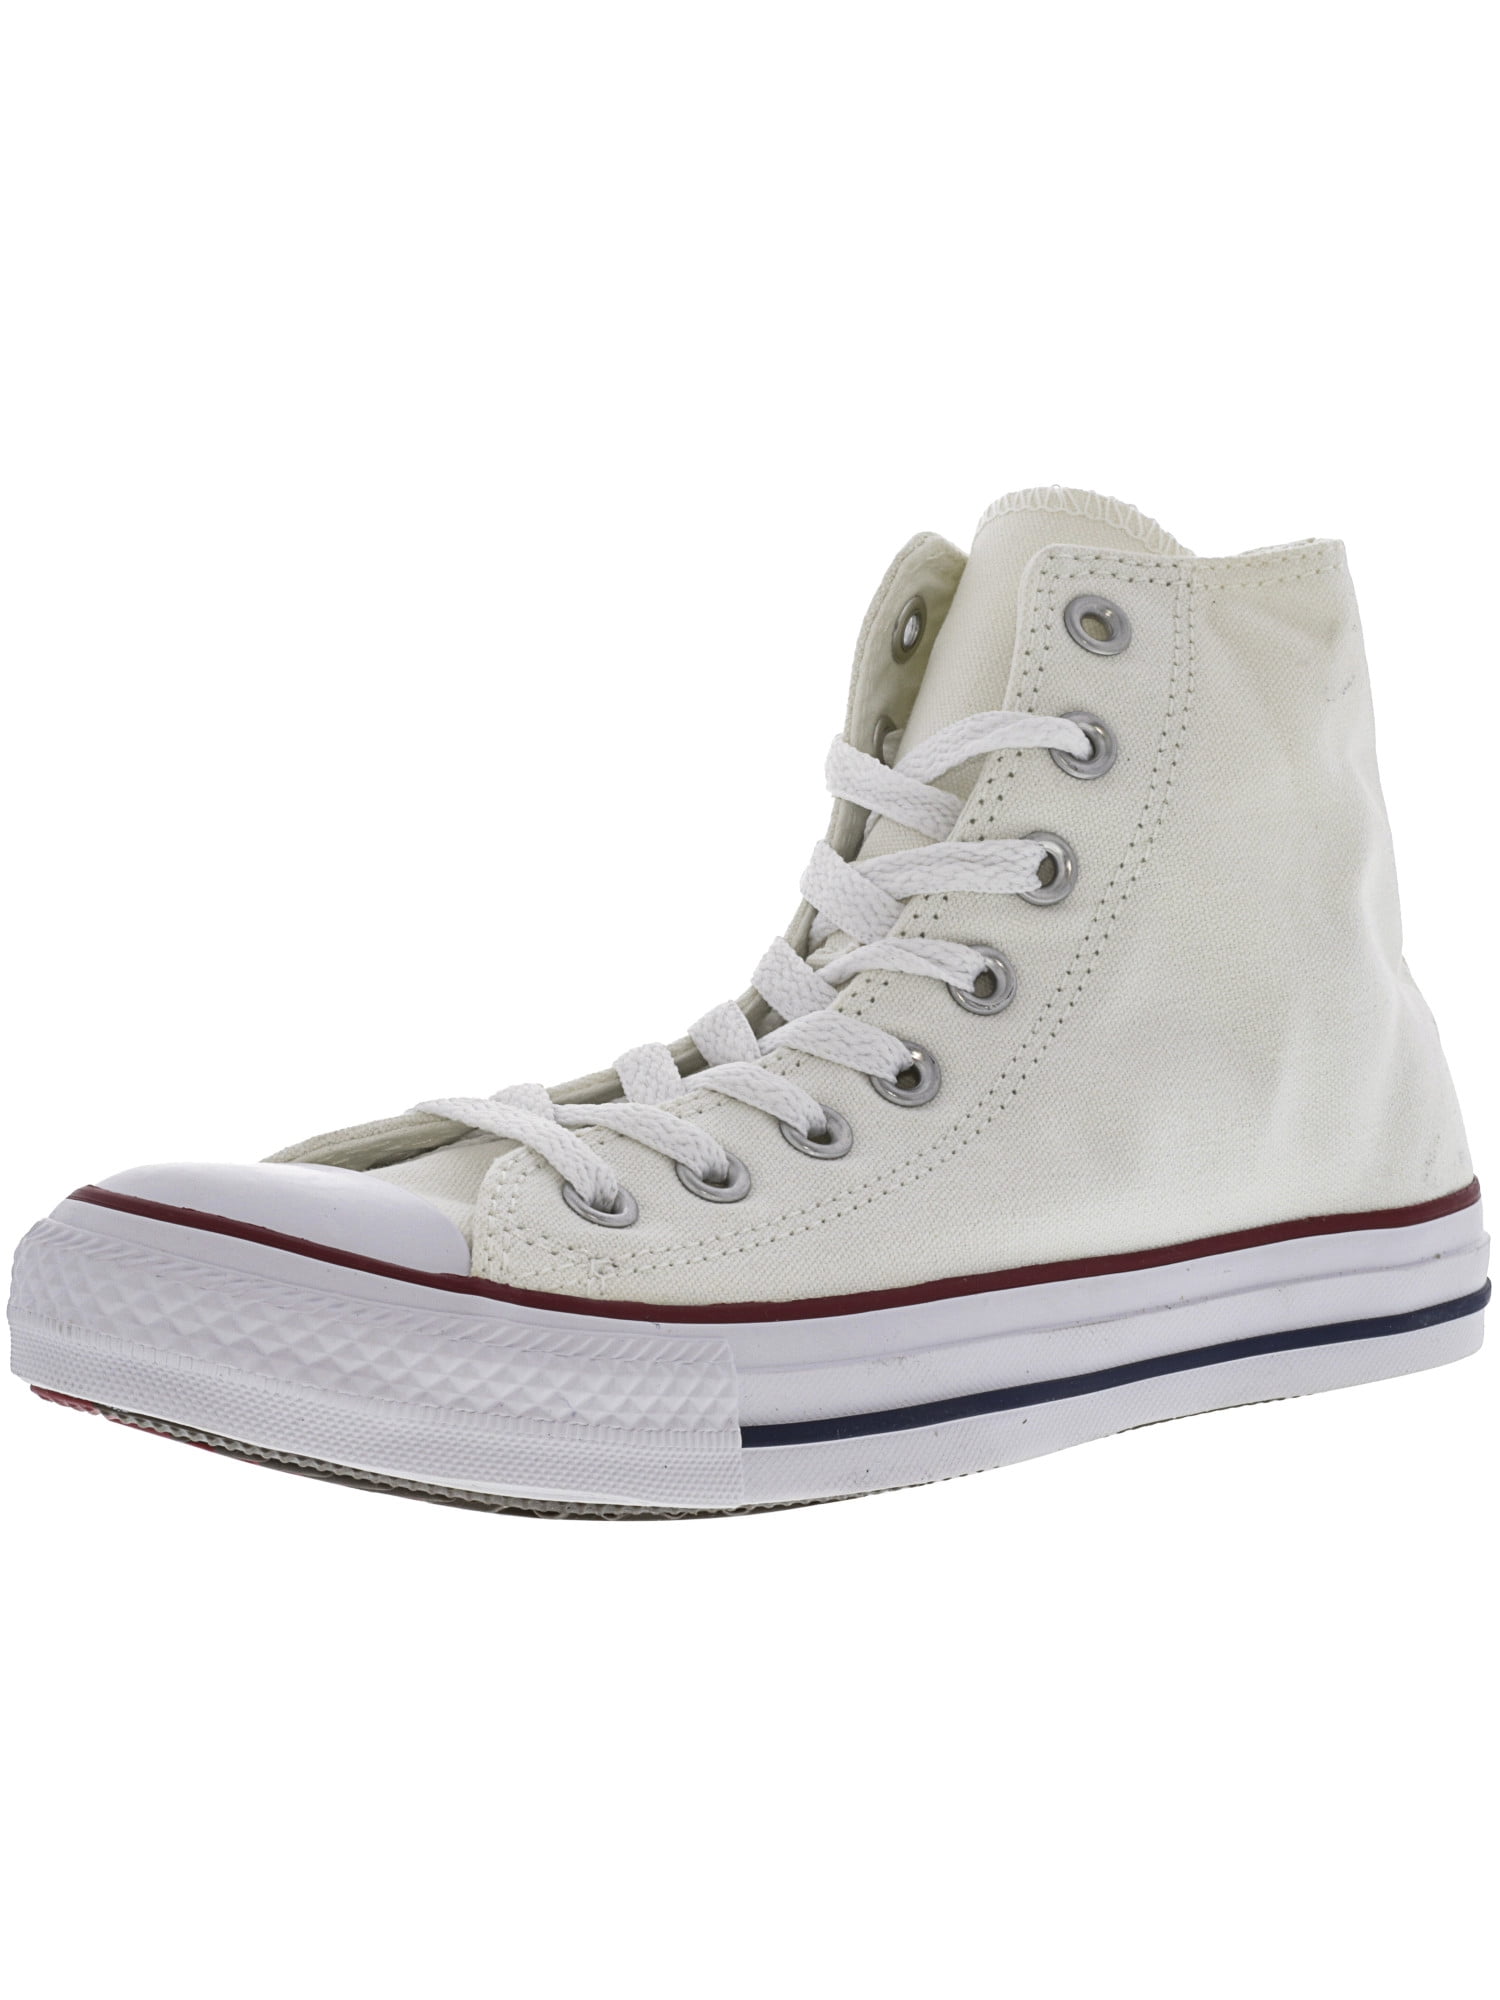 Converse Chuck Taylor All Star Hi White / Red Blue High-Top Fashion Sneaker  - 9M 7M 